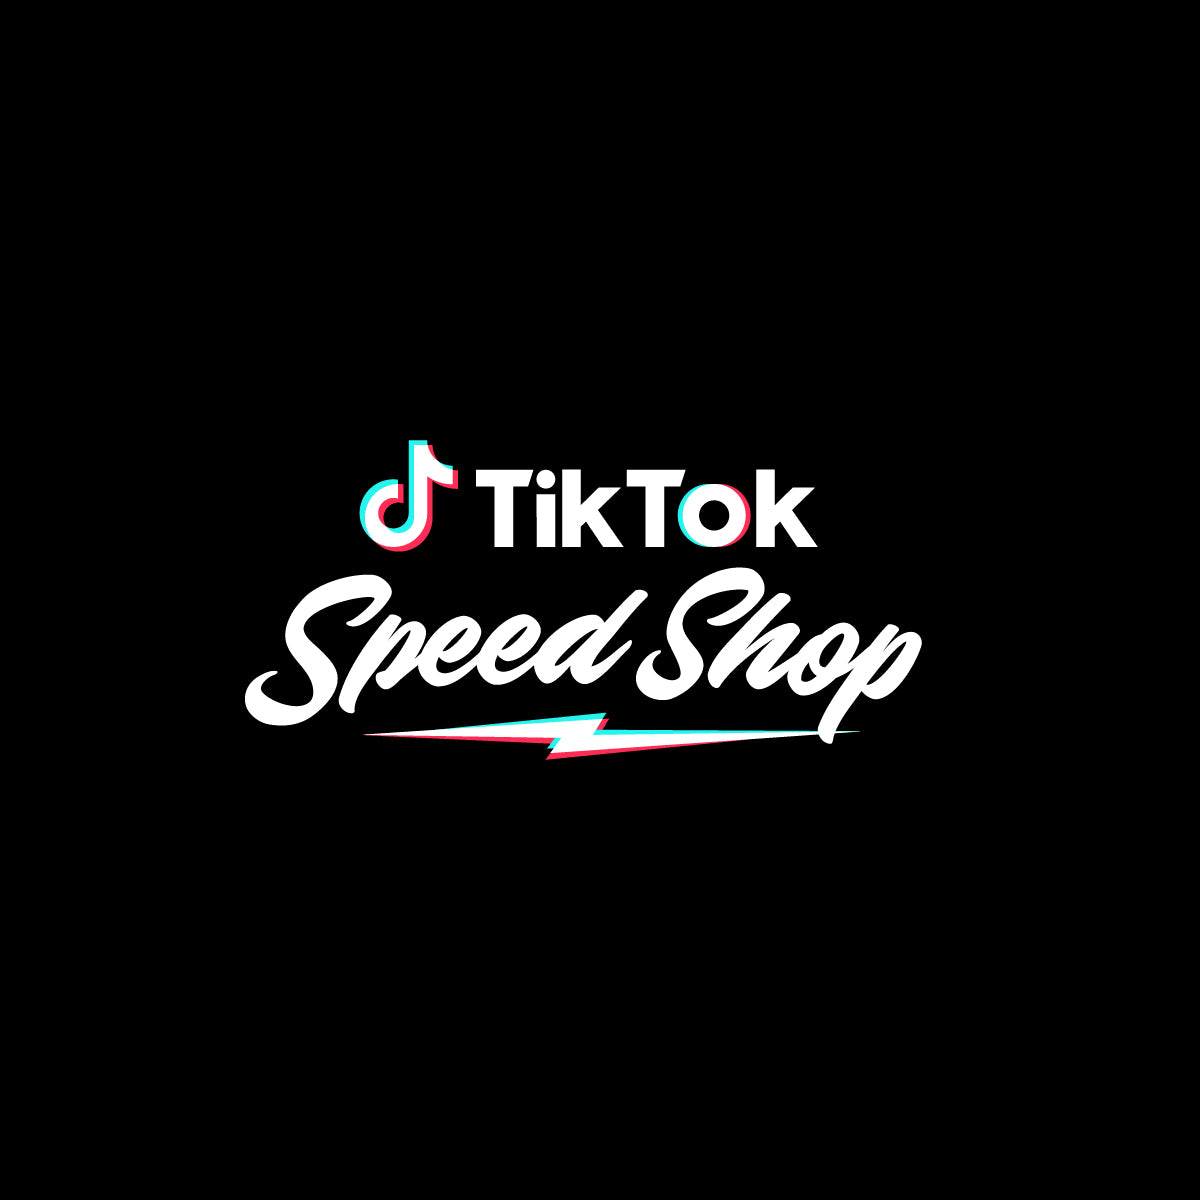 TikTok Speed Shop Old School Rope Hat - Black